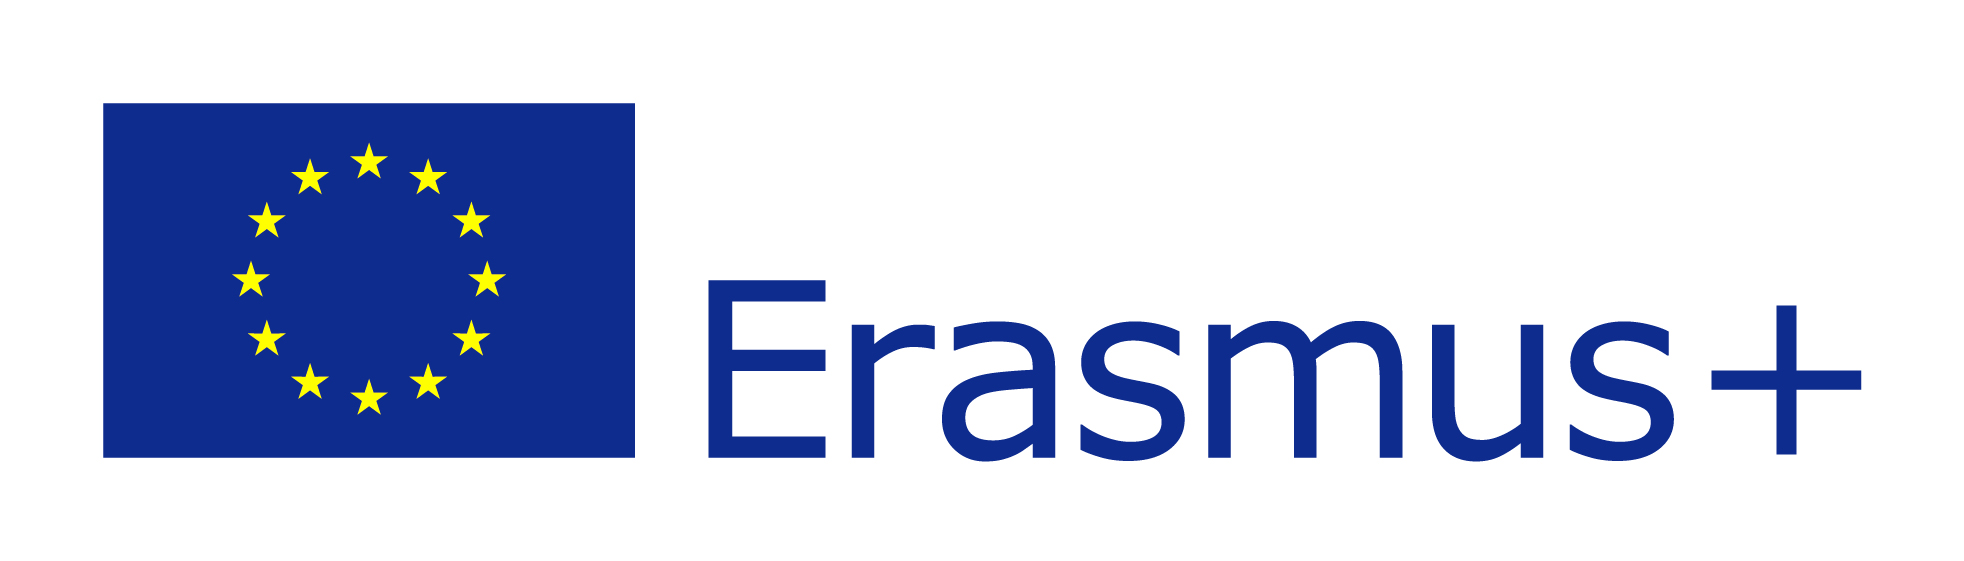 EU flag Erasmus+ vect POS